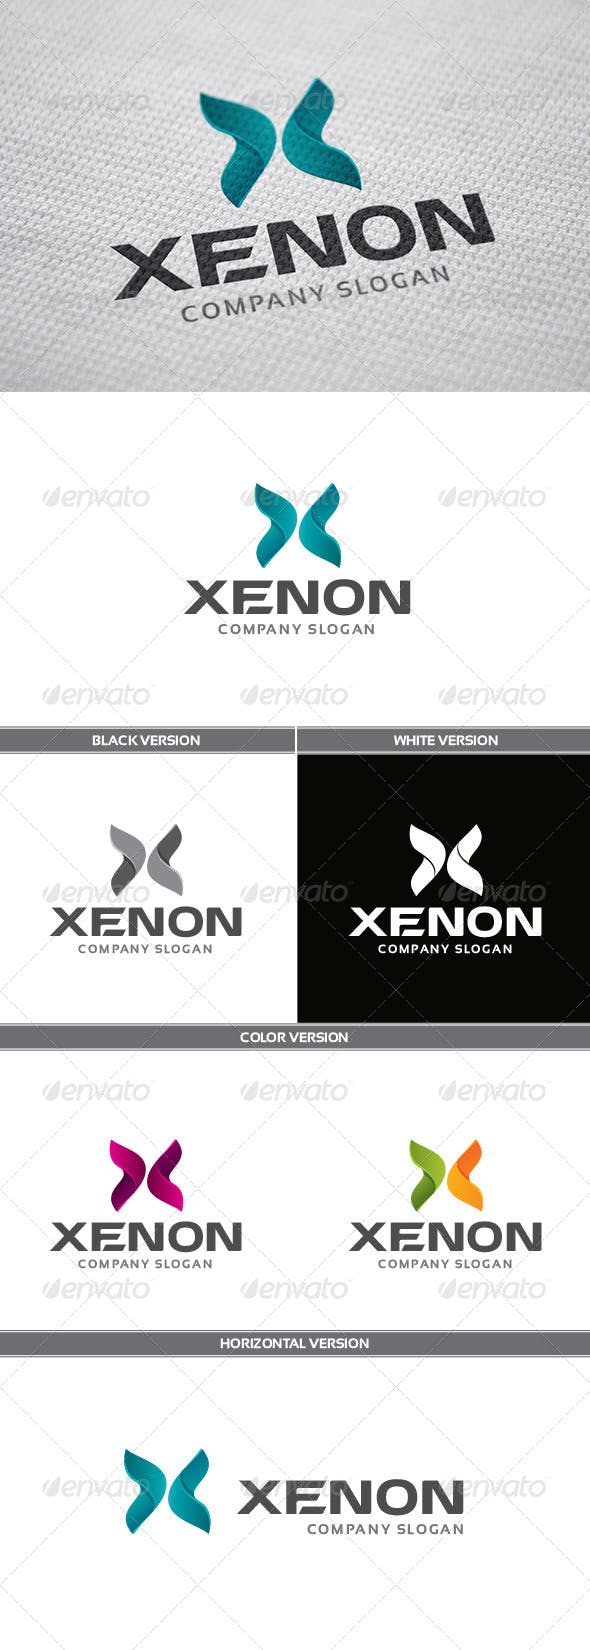 Xenon Logo - Xenon Logo by Progmatika | GraphicRiver